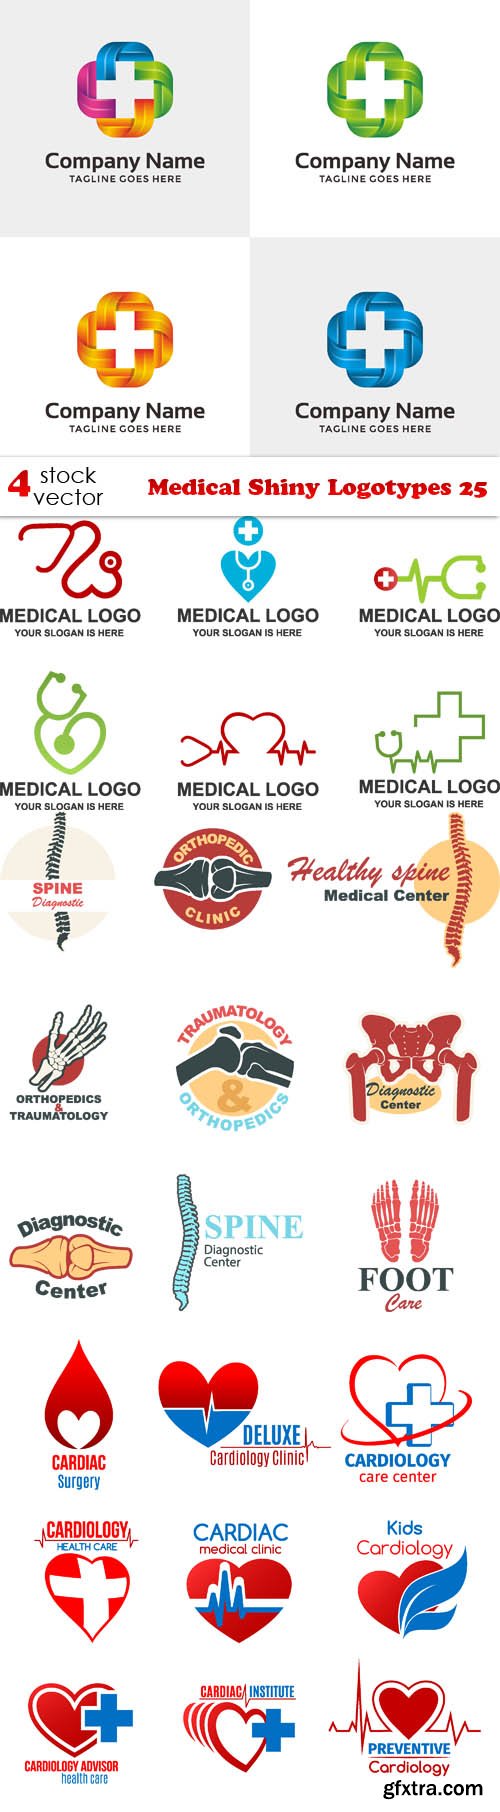 Vectors - Medical Shiny Logotypes 25